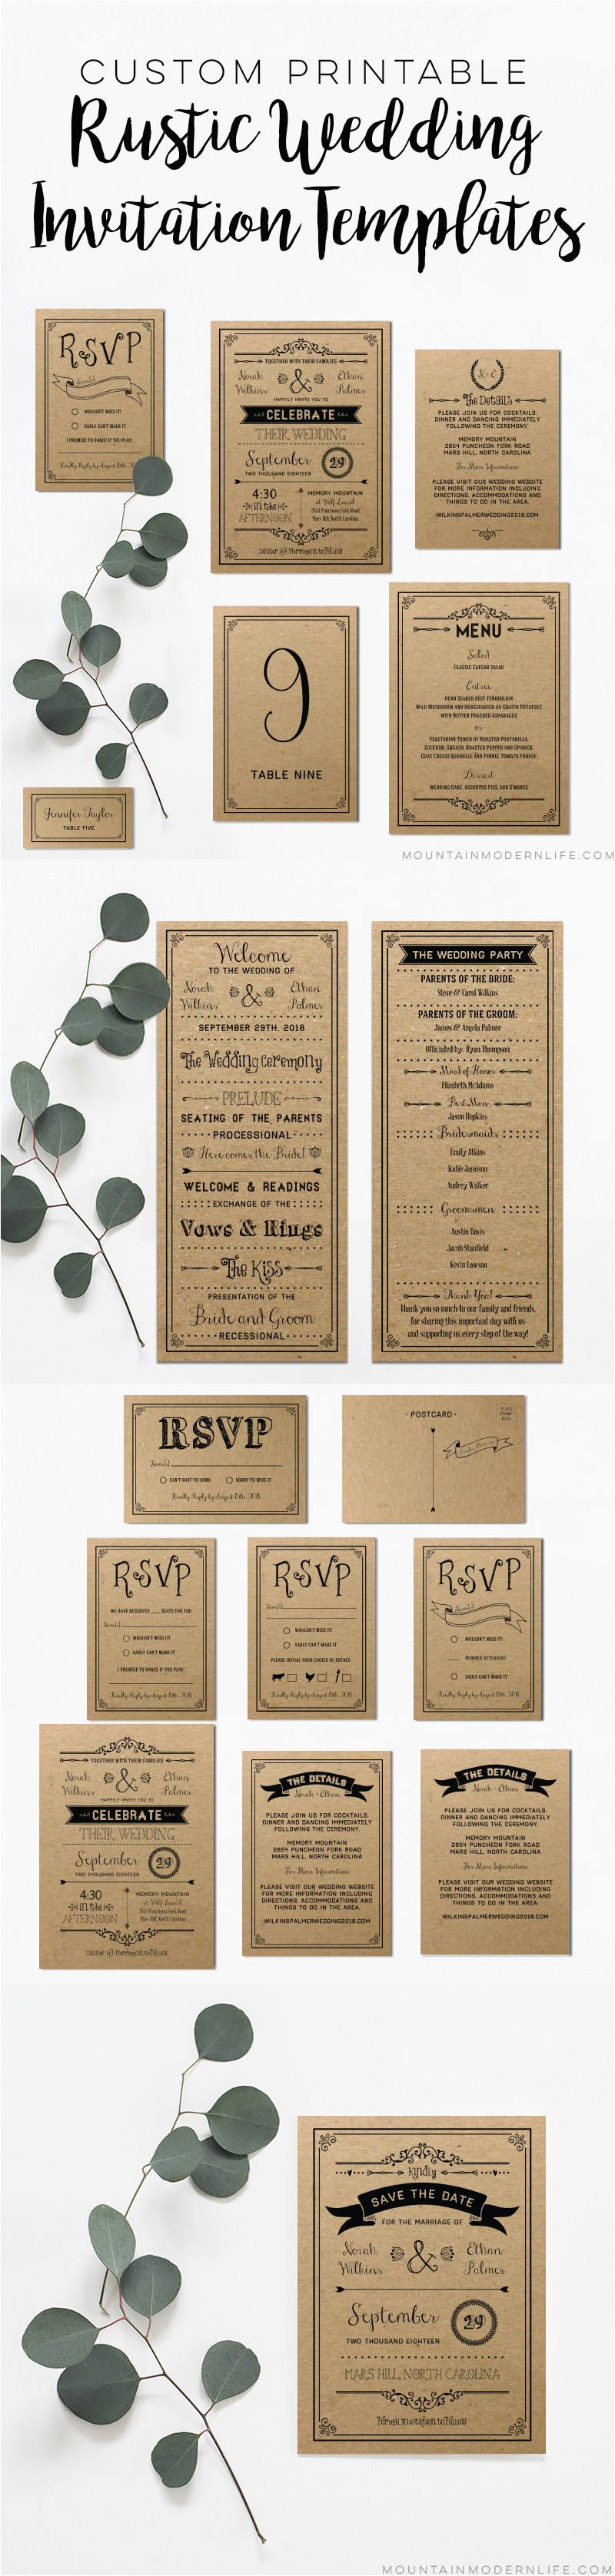 customized wedding invitation templates